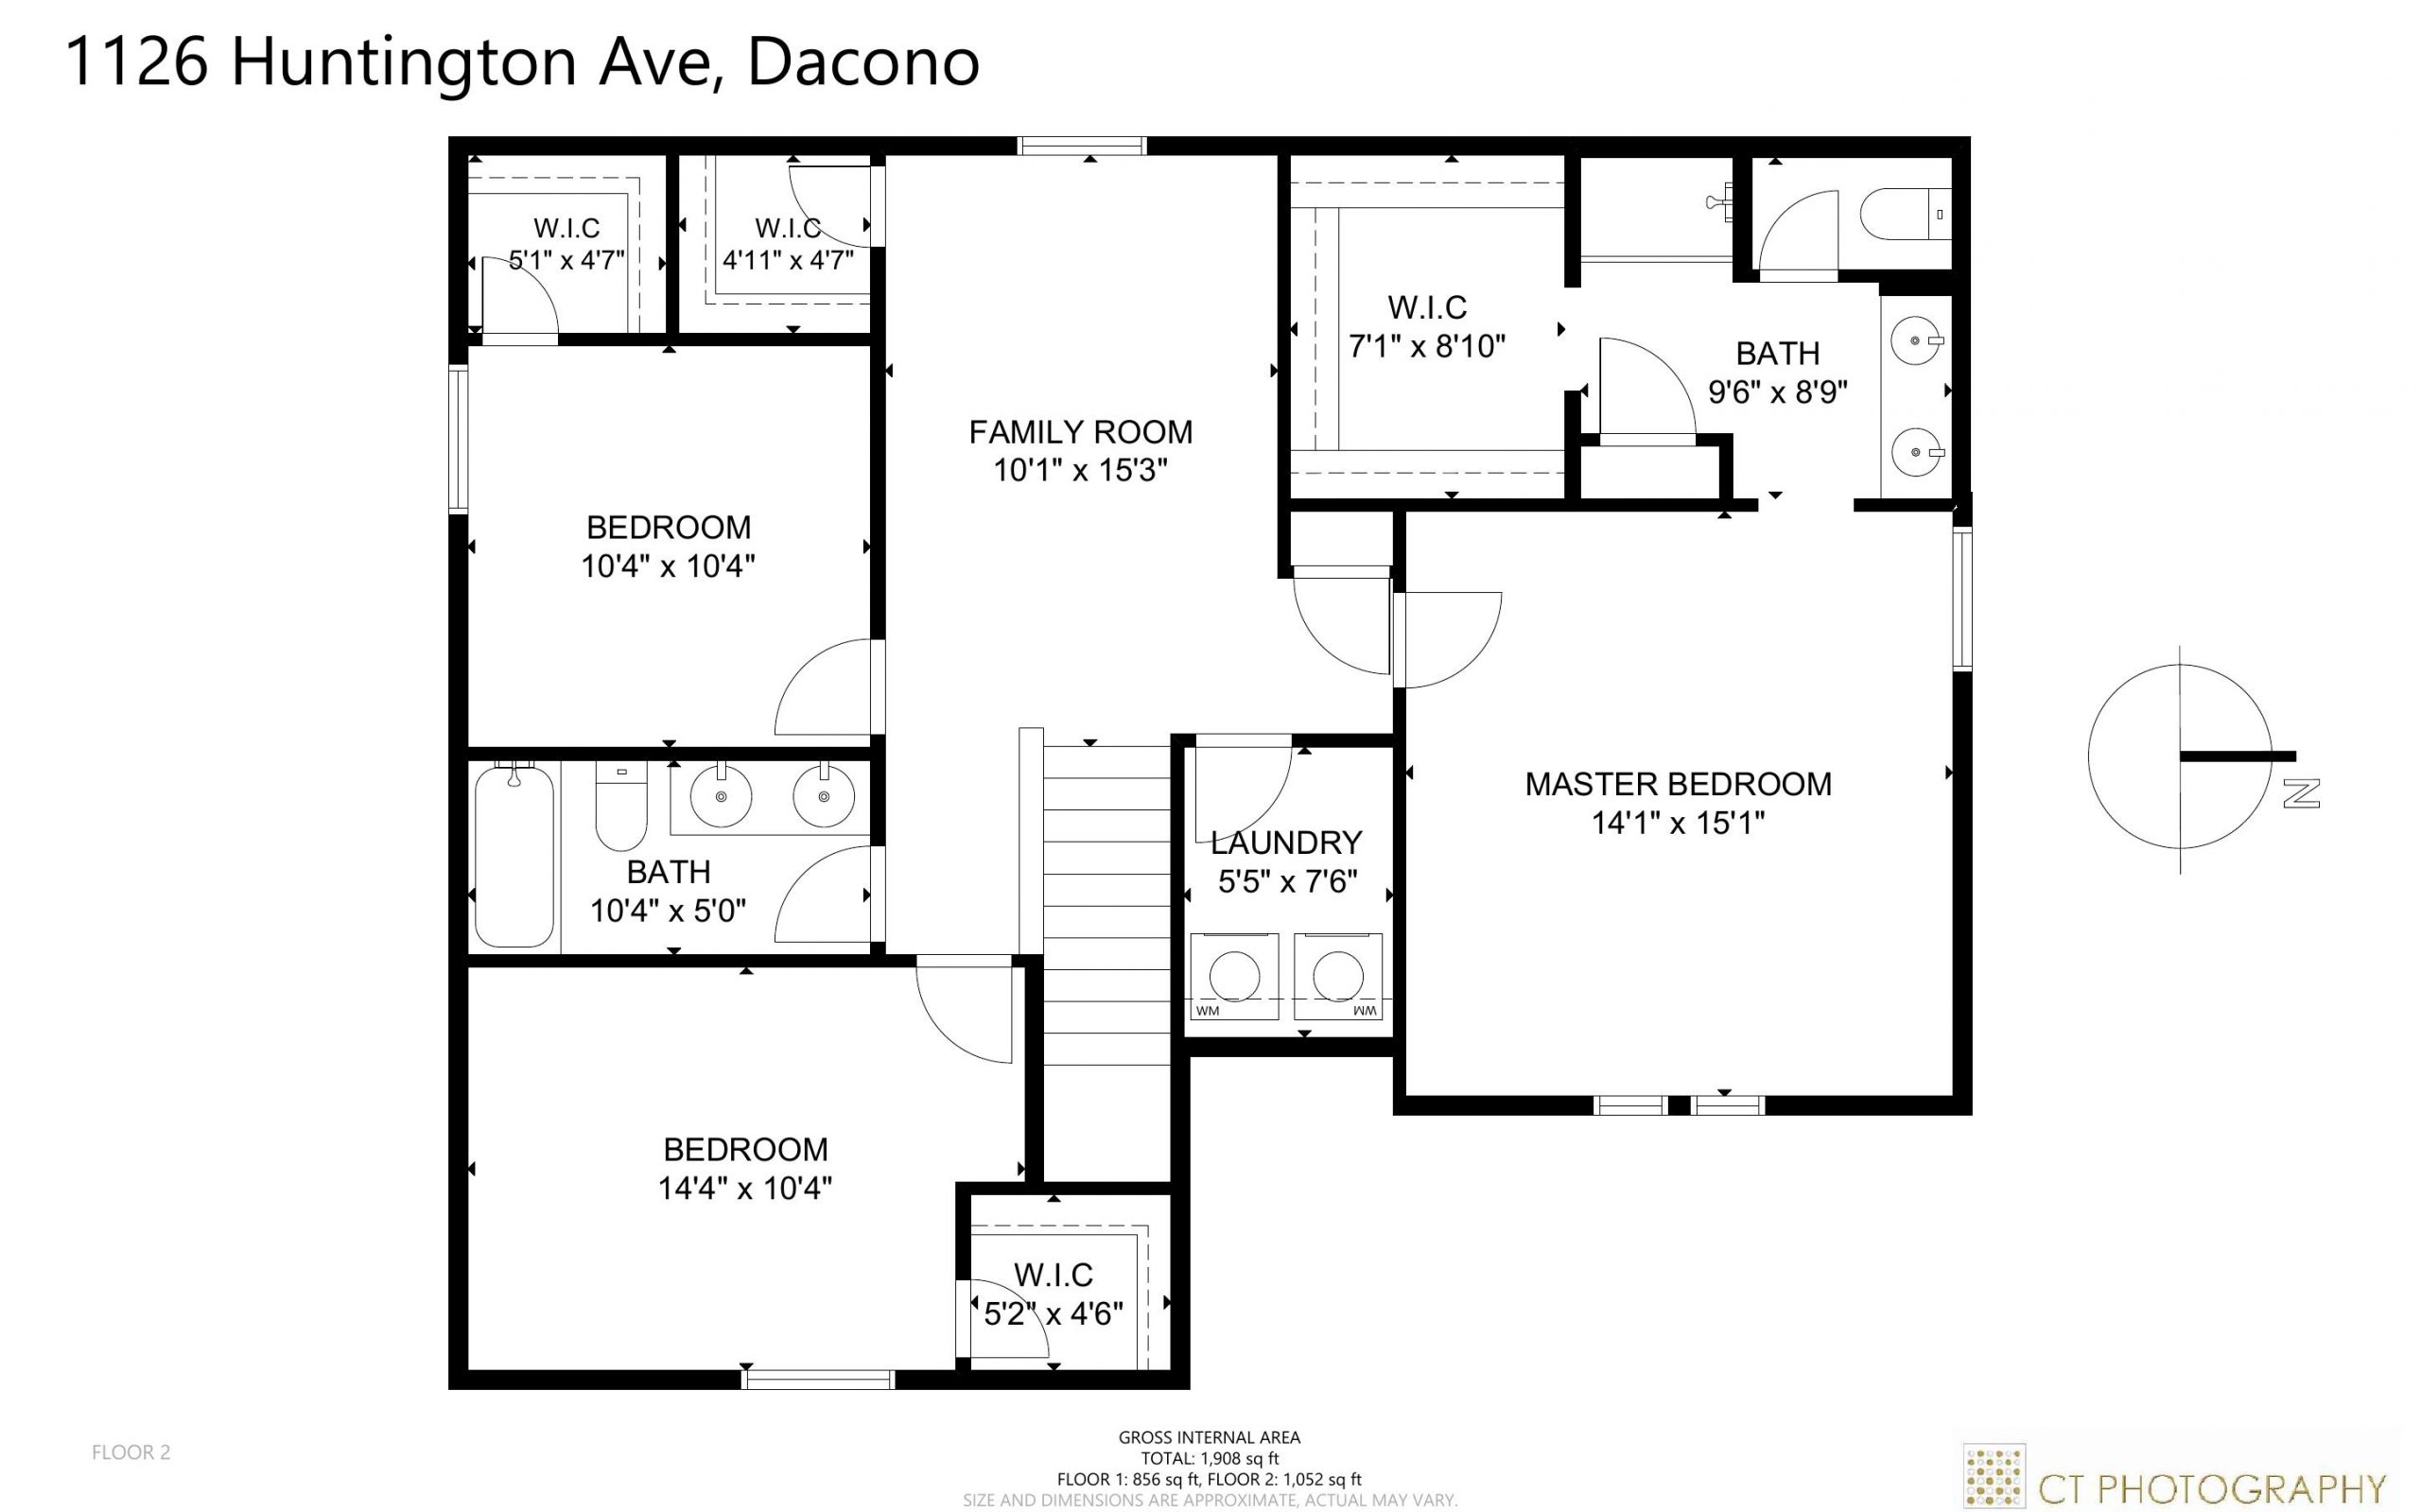 REAL ESTATE LISTING: 1126 Huntington Ave Dacono Upper Level Floor Plan